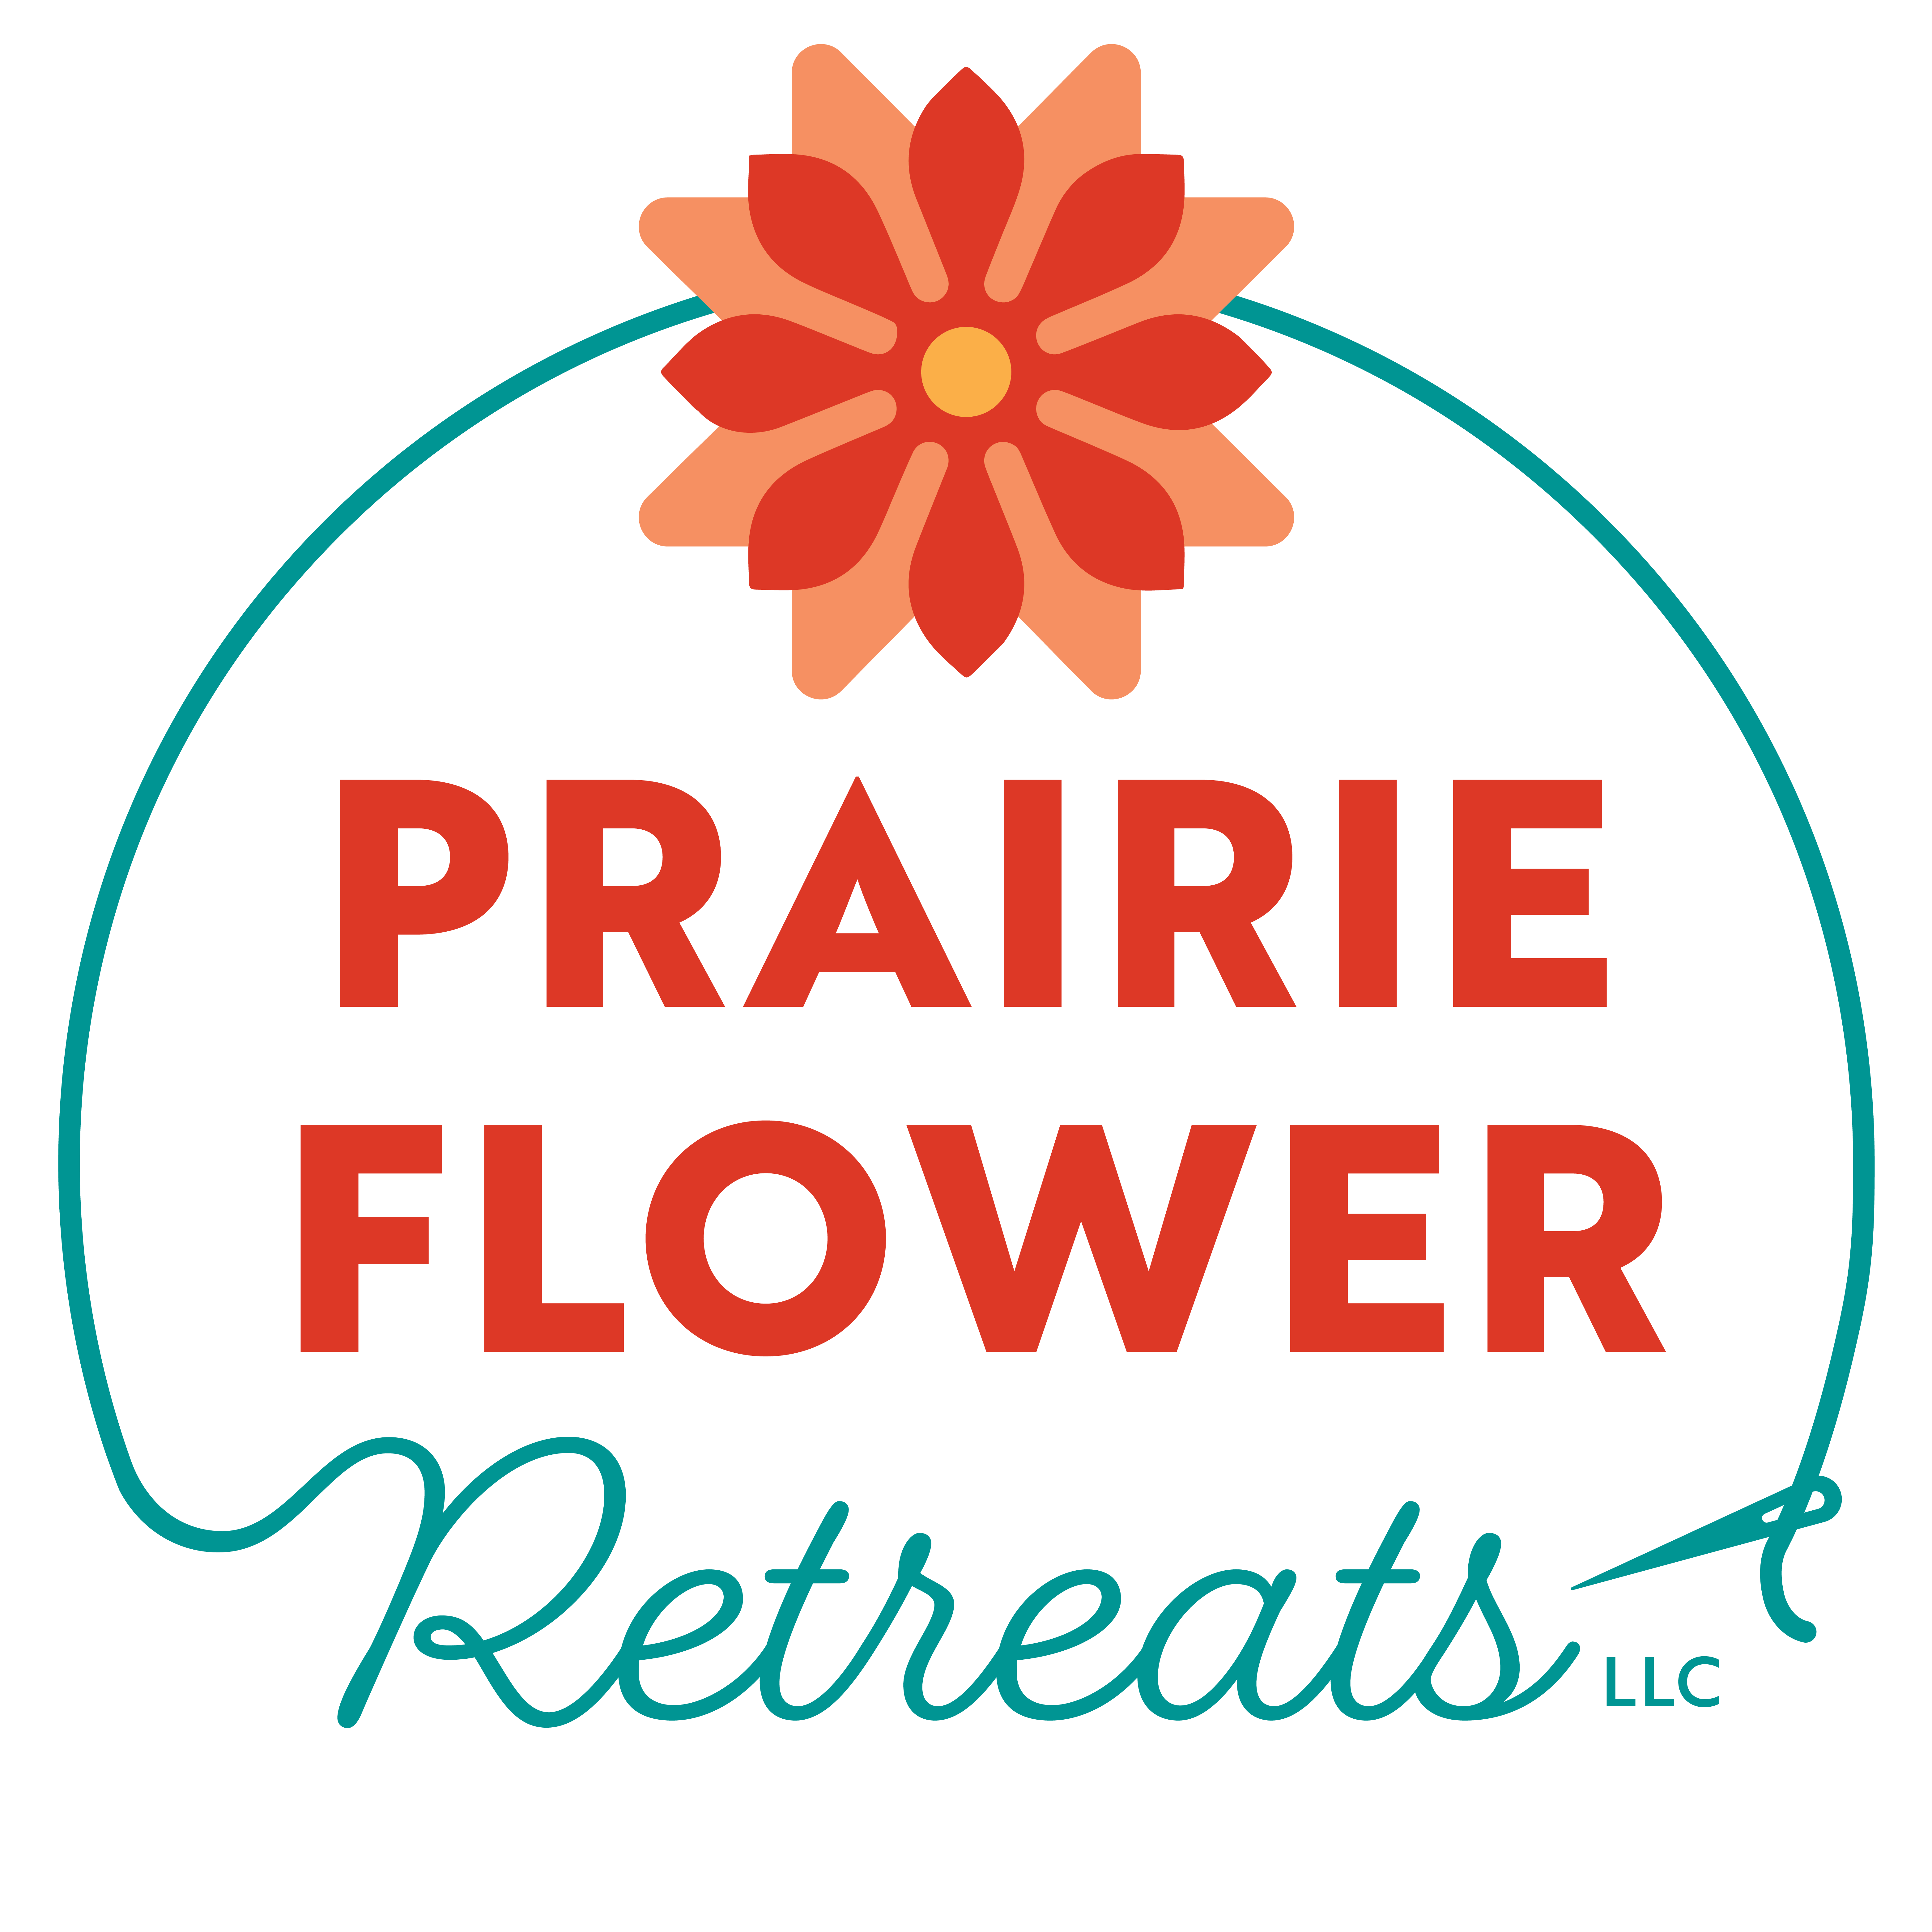 Prairie Flower Retreats